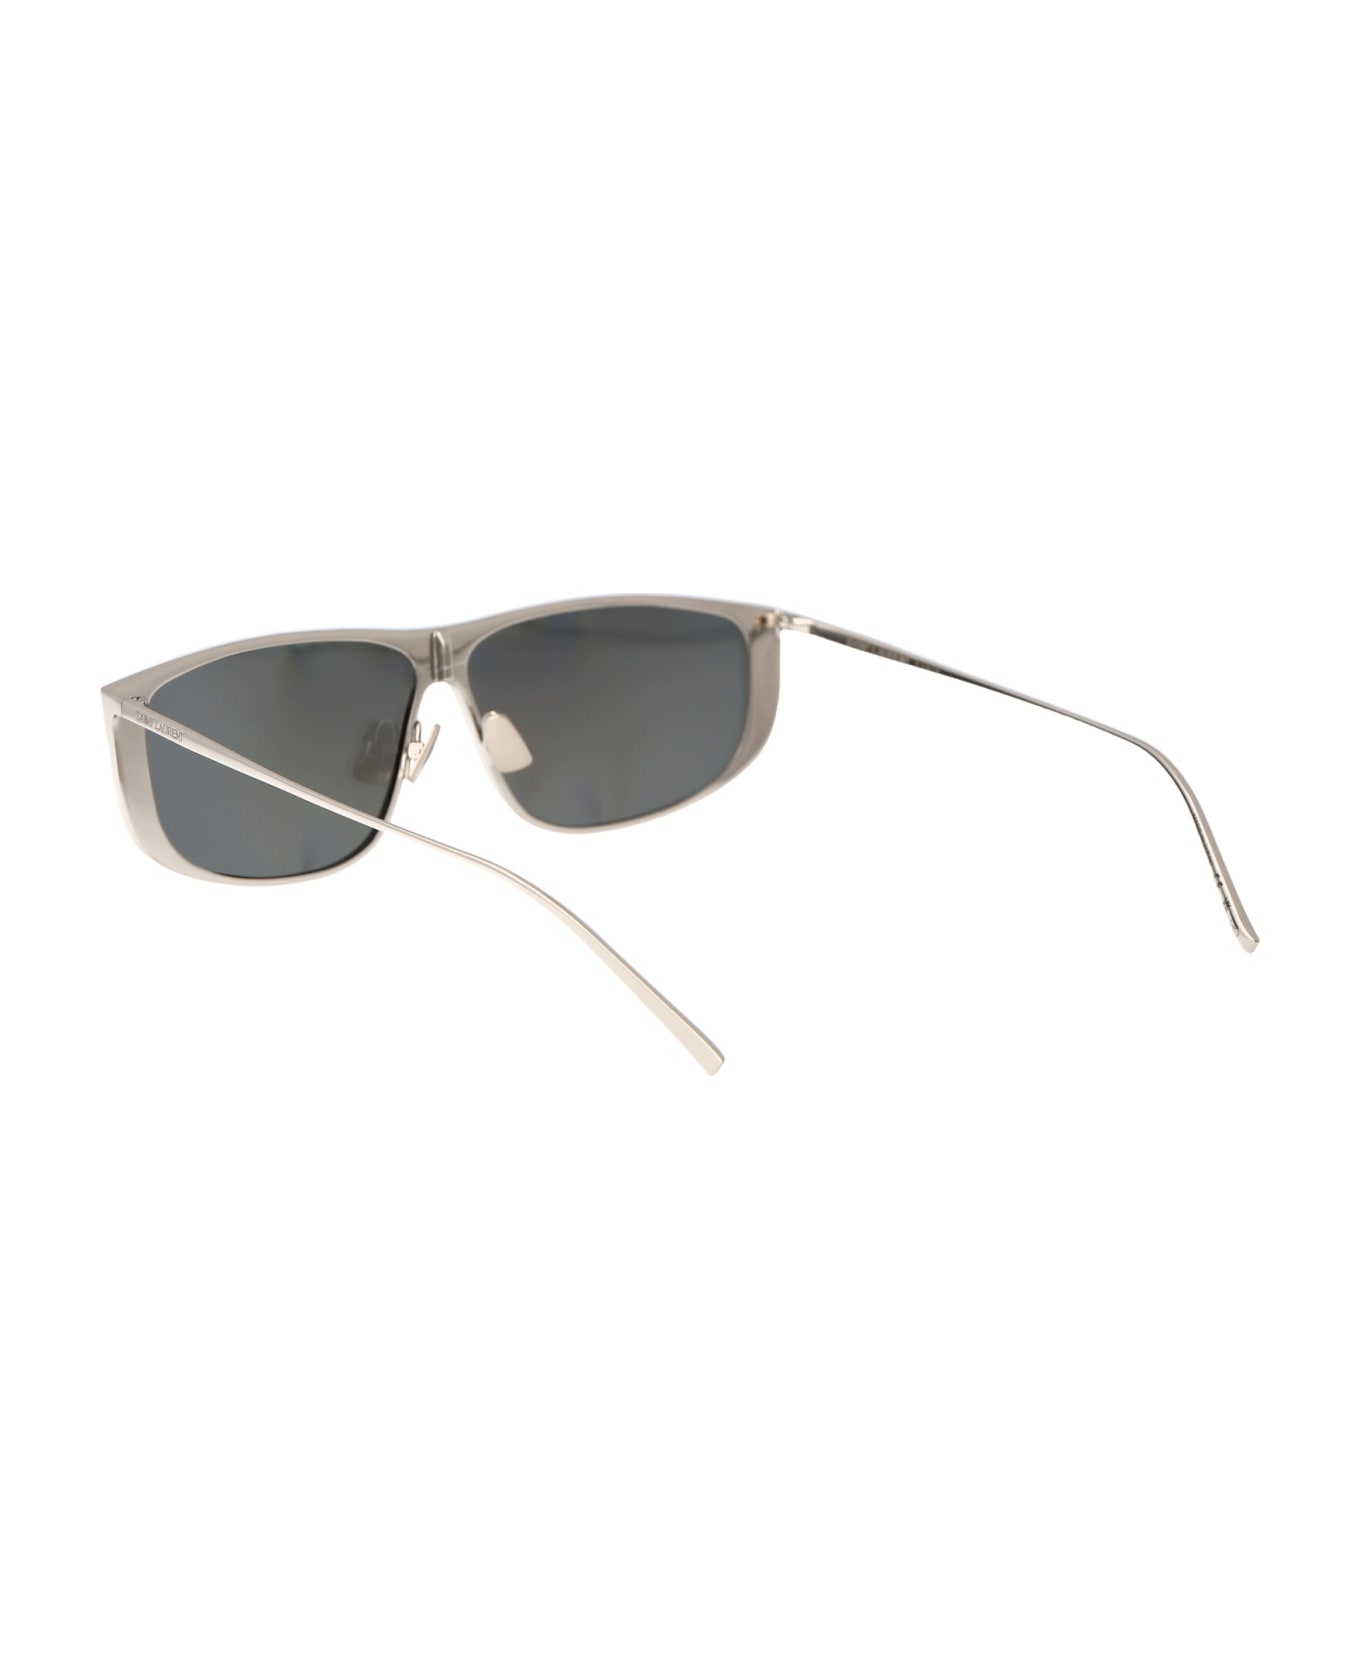 Saint Laurent Eyewear Sl 605 Luna Sunglasses - 003 SILVER SILVER SILVER サングラス